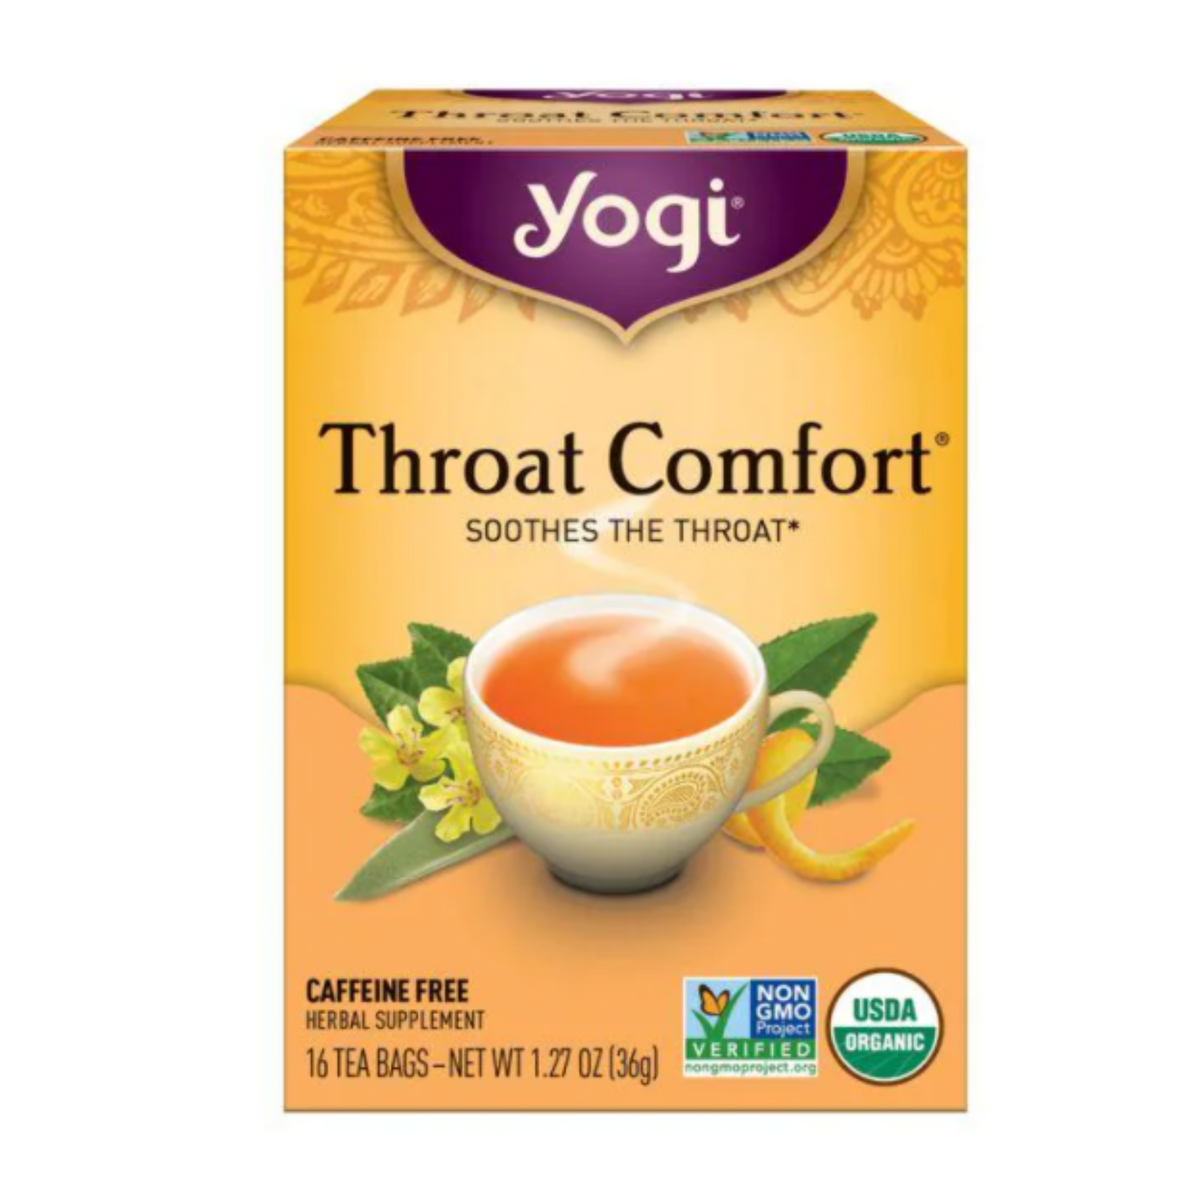 Primary image of Throat Comfort Tea Bags